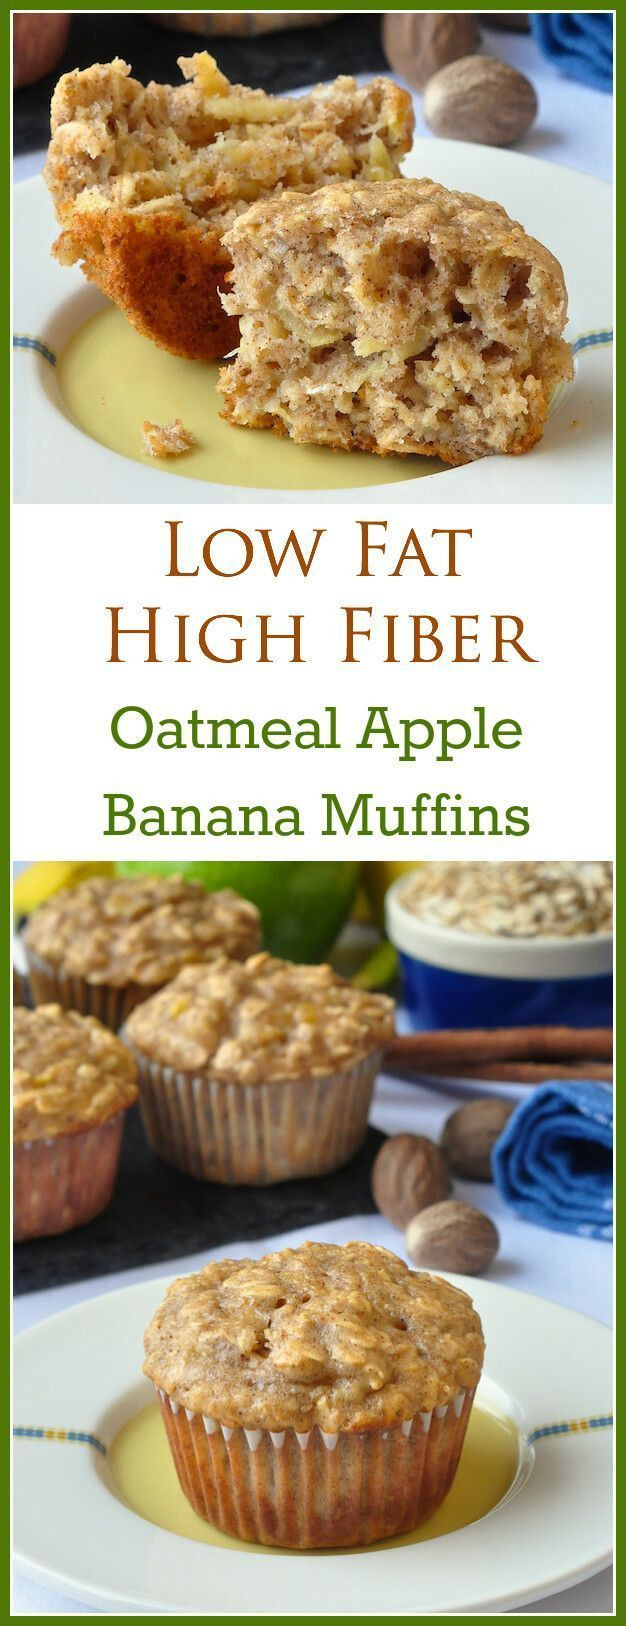 Healthy Breakfast Muffin Recipes
 Oatmeal Apple Banana Low Fat Muffins Recipe